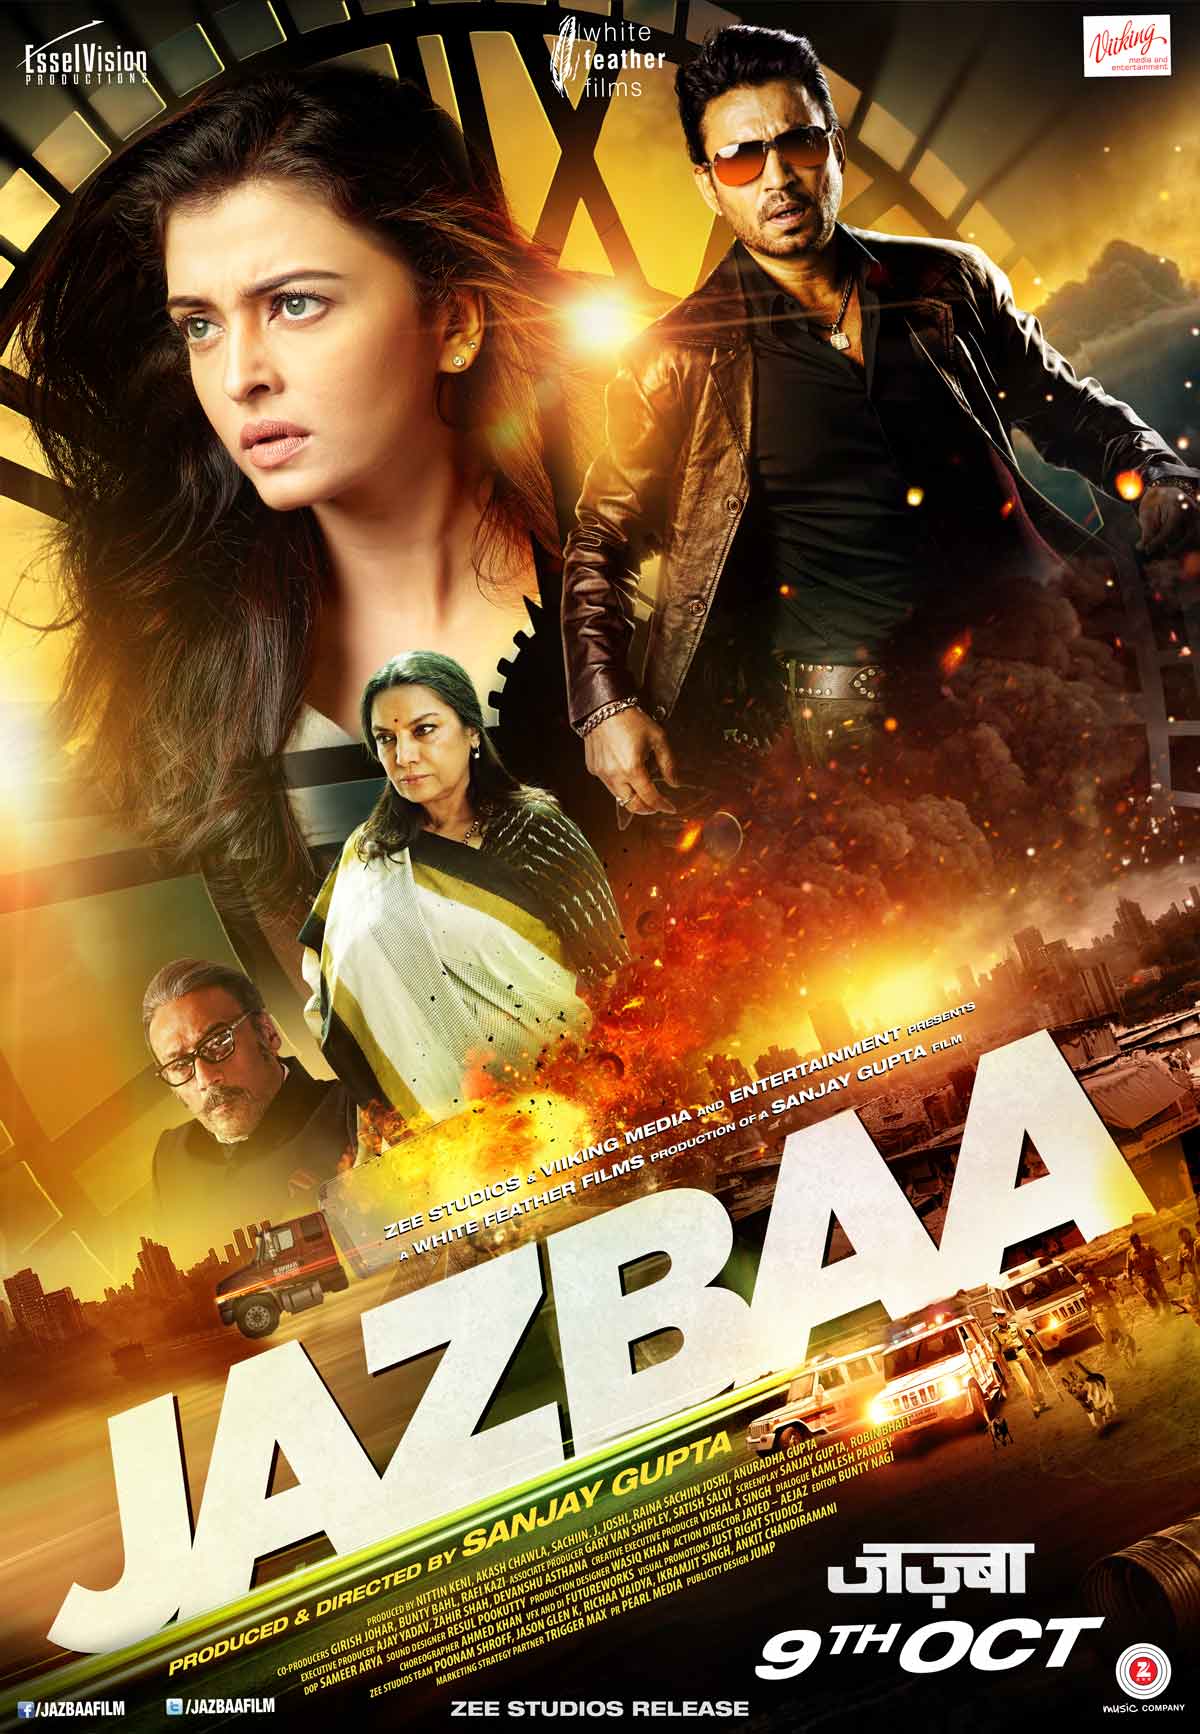 Jazbaa Movie 2015 - Upcoming Bollywood Film 2015